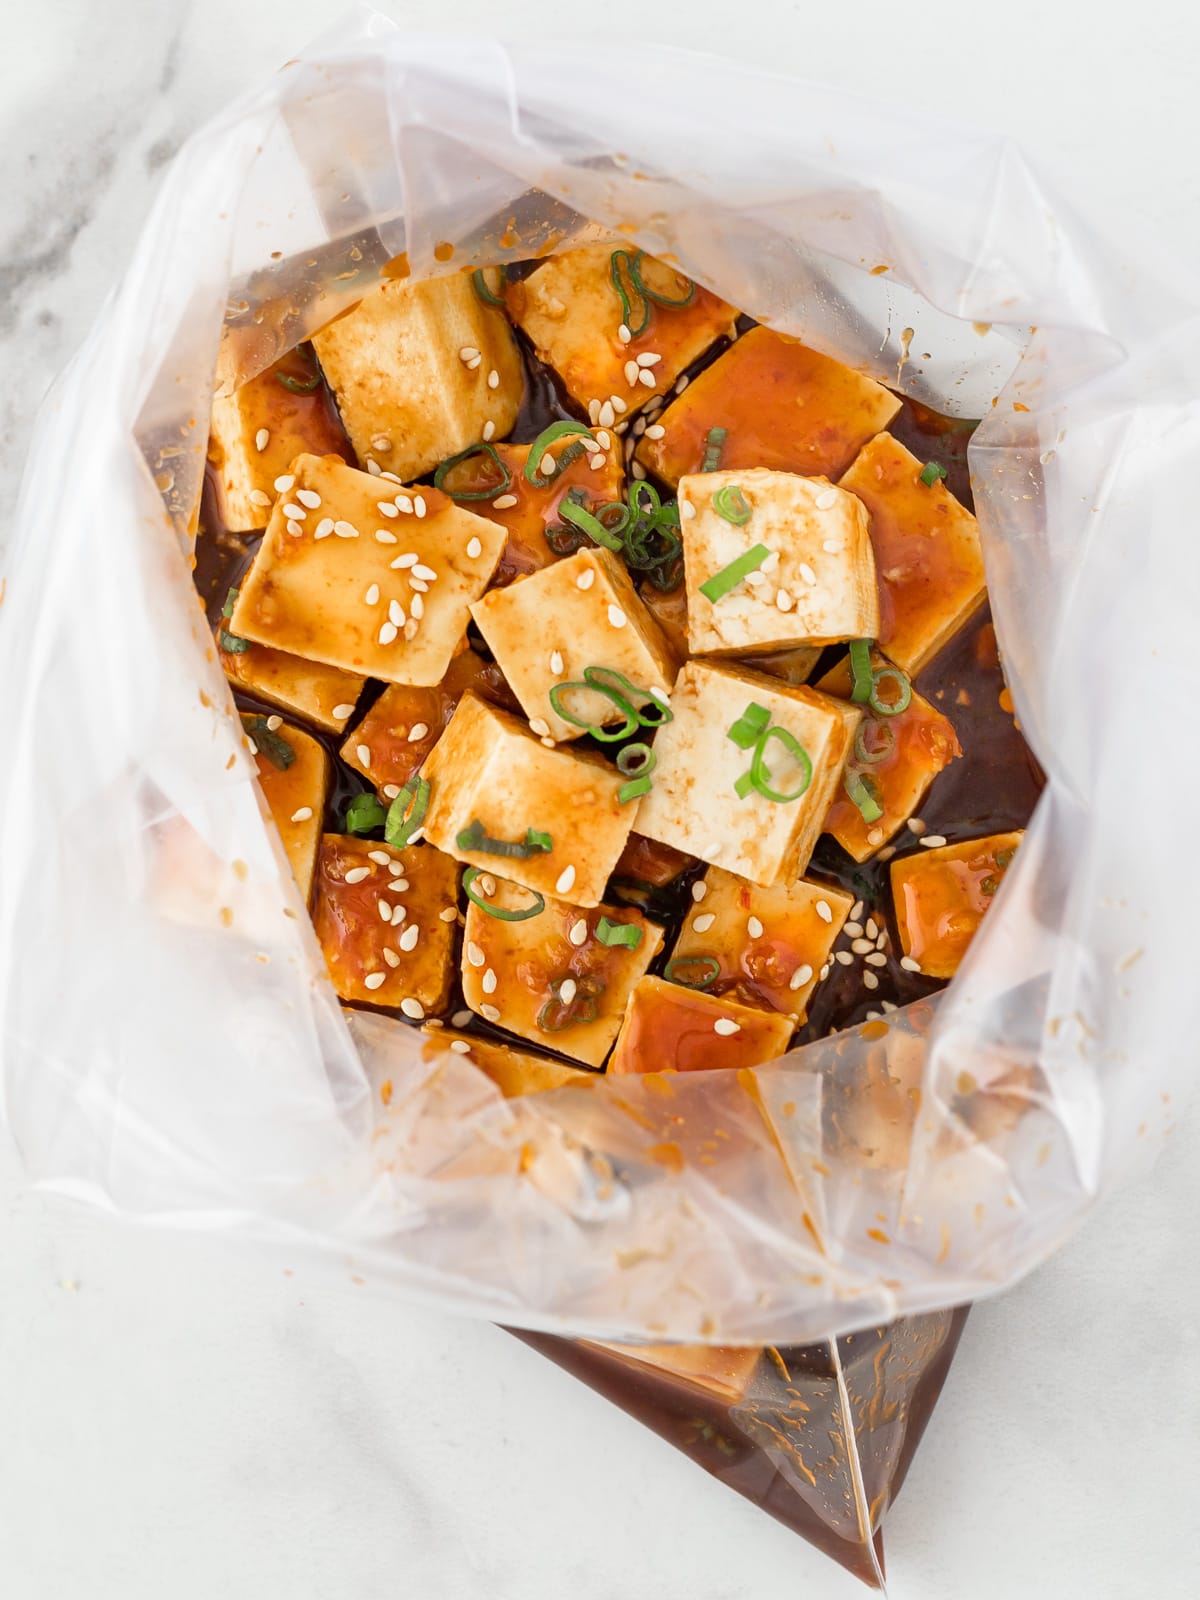 Tofu cubes in a bag of marinade.